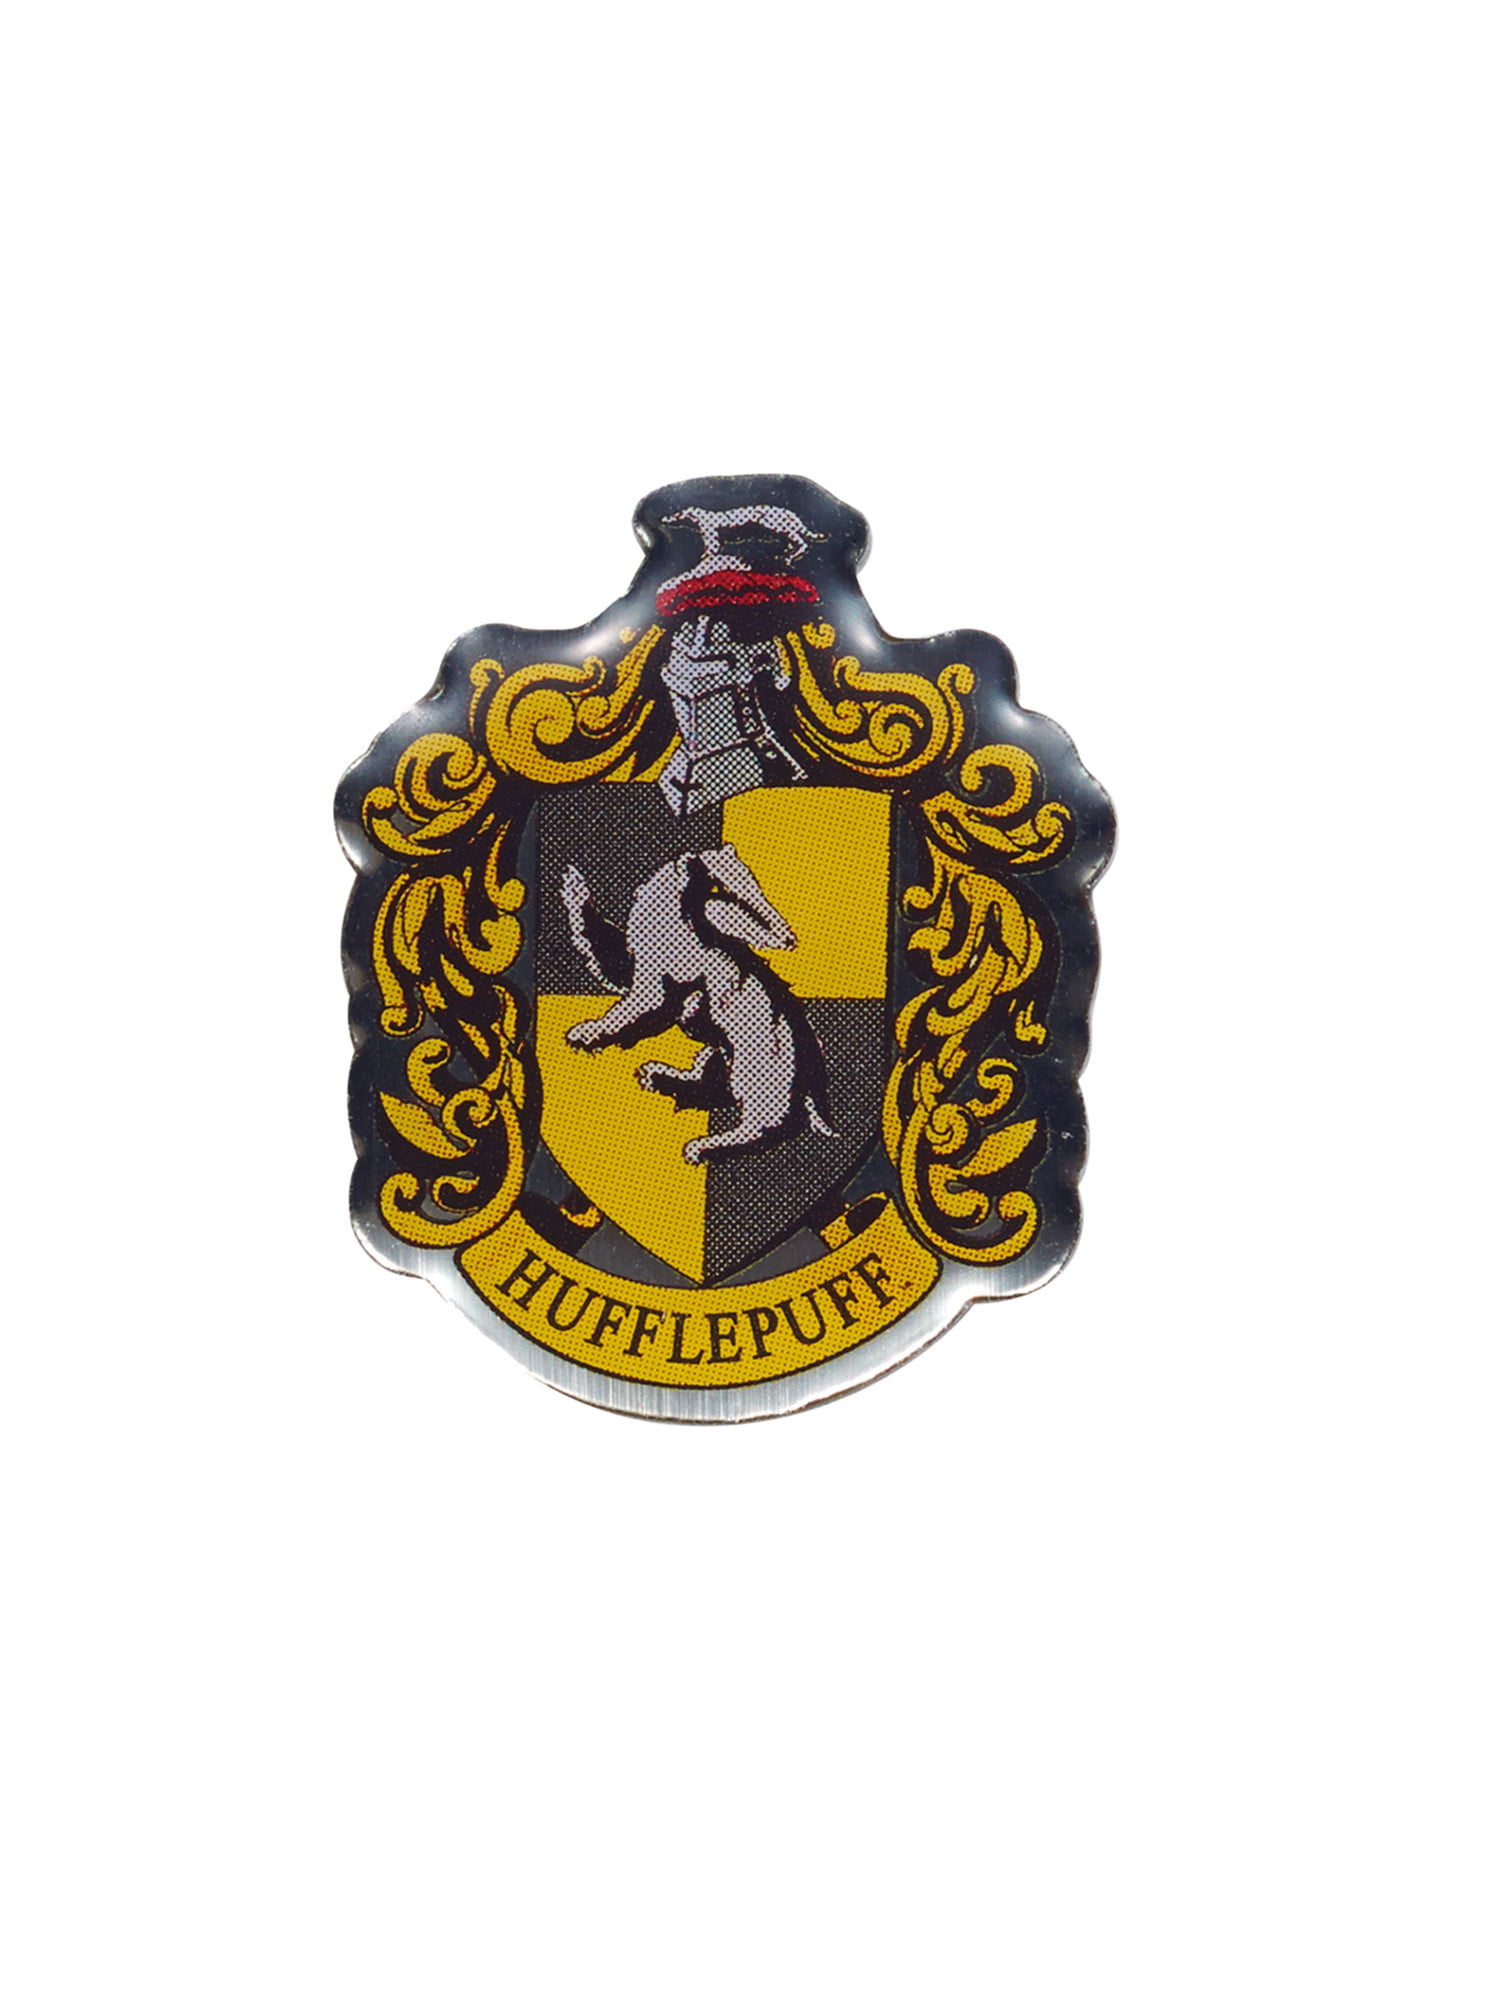 Harry Potter Hogwarts Pin Badge Brand New 